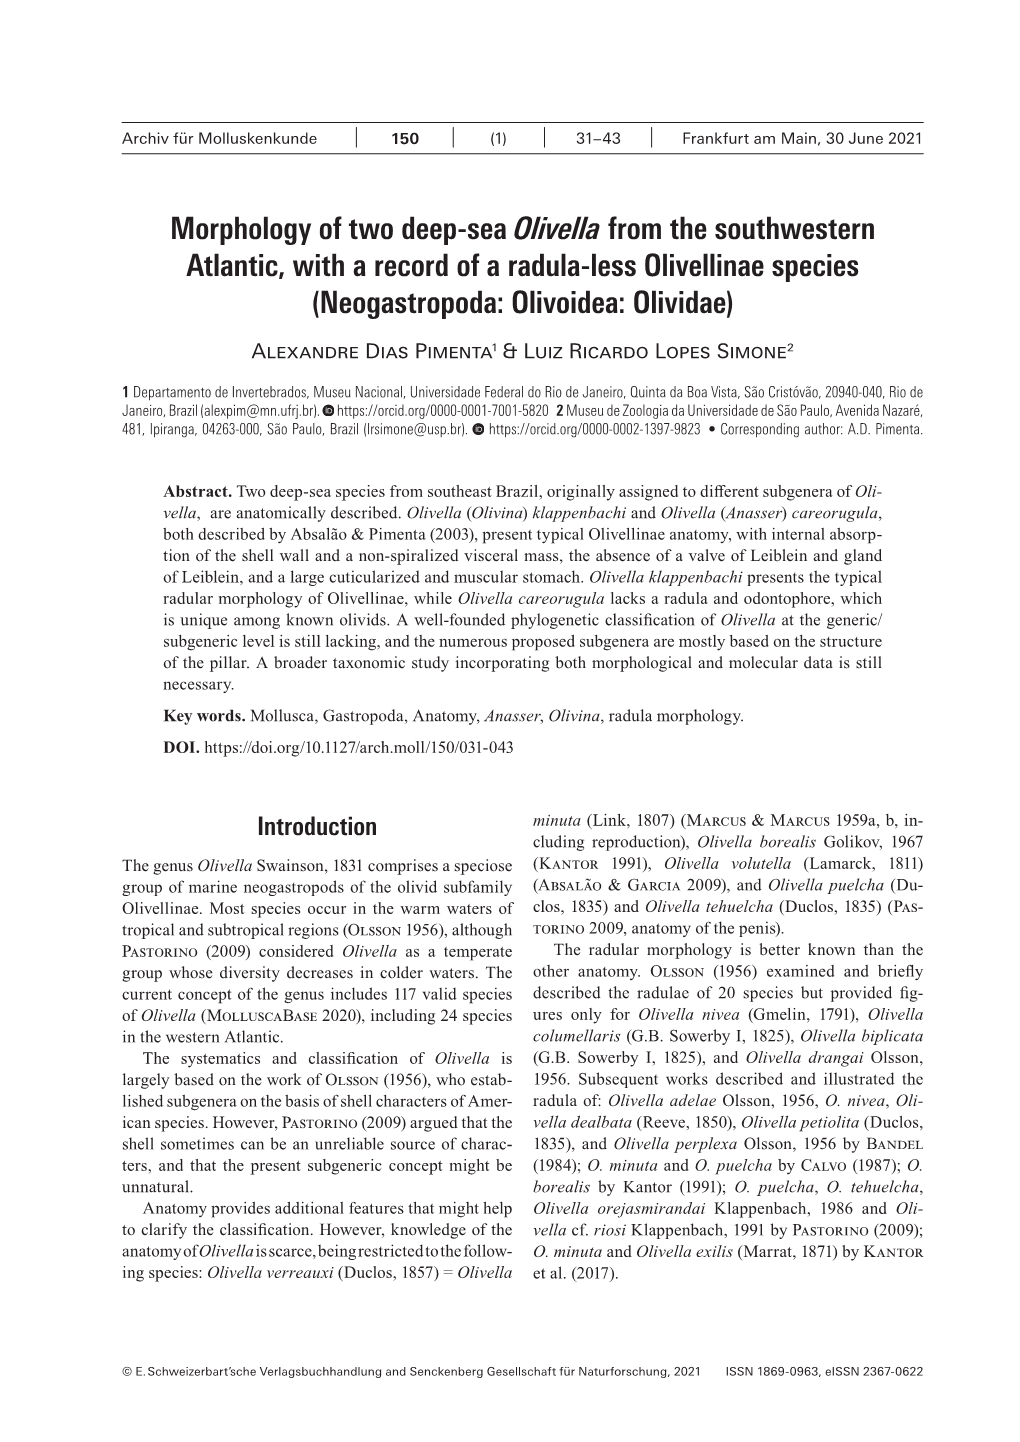 Morphology of Two Deep-Sea Olivella from the Southwestern Atlantic, with a Record of a Radula-Less Olivellinae Species (Neogastropoda: Olivoidea: Olividae)